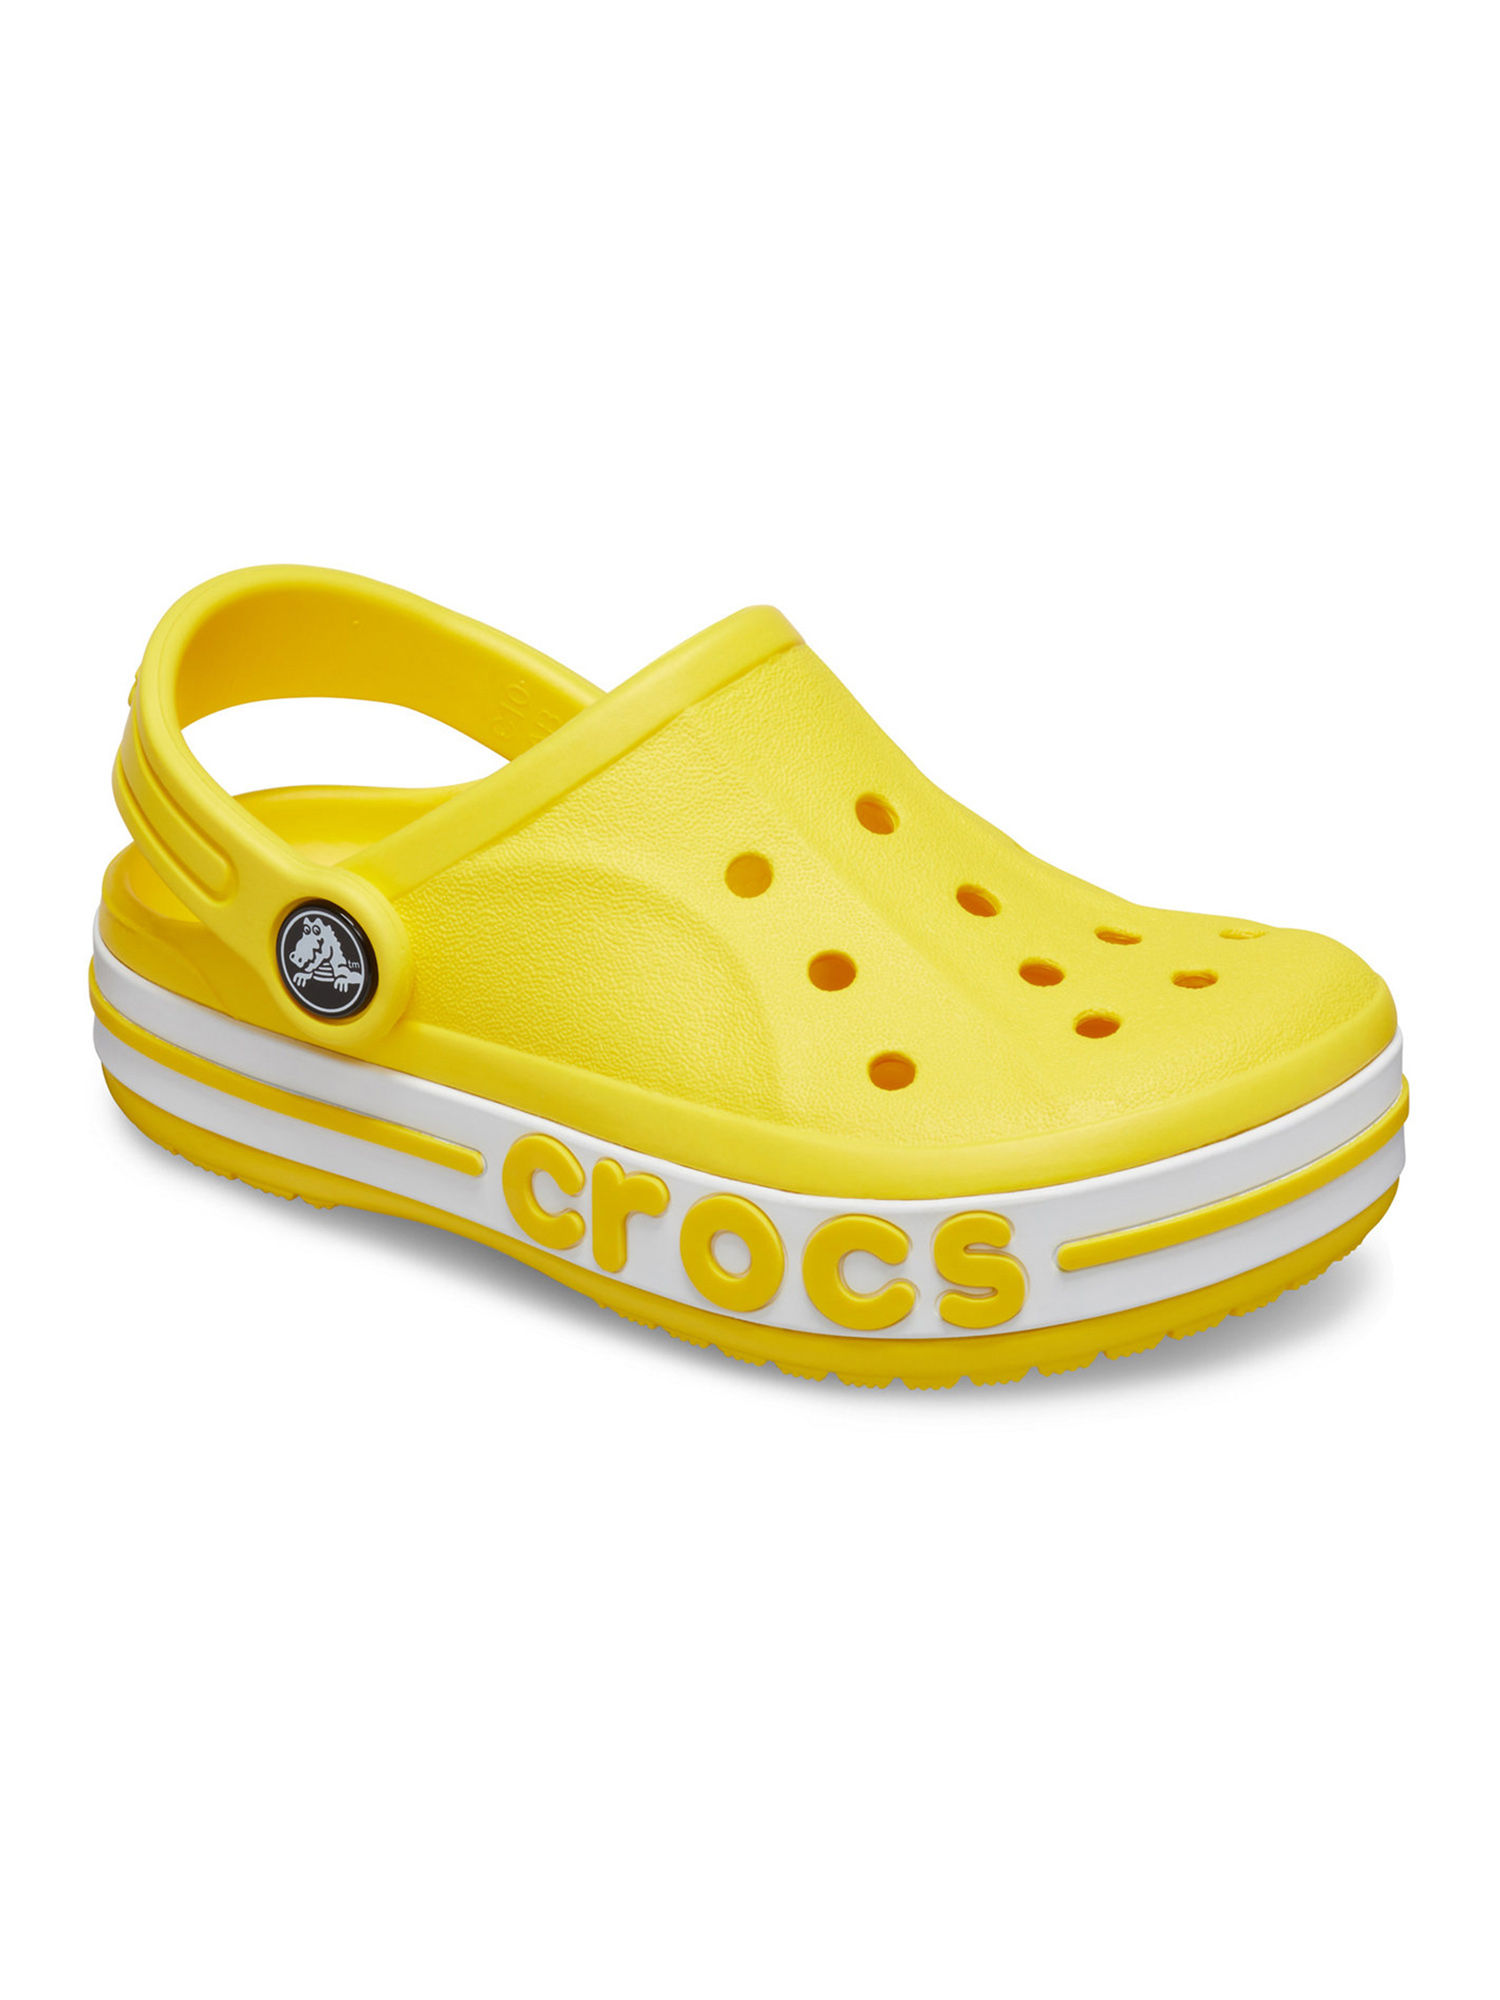 crocs for kids yellow